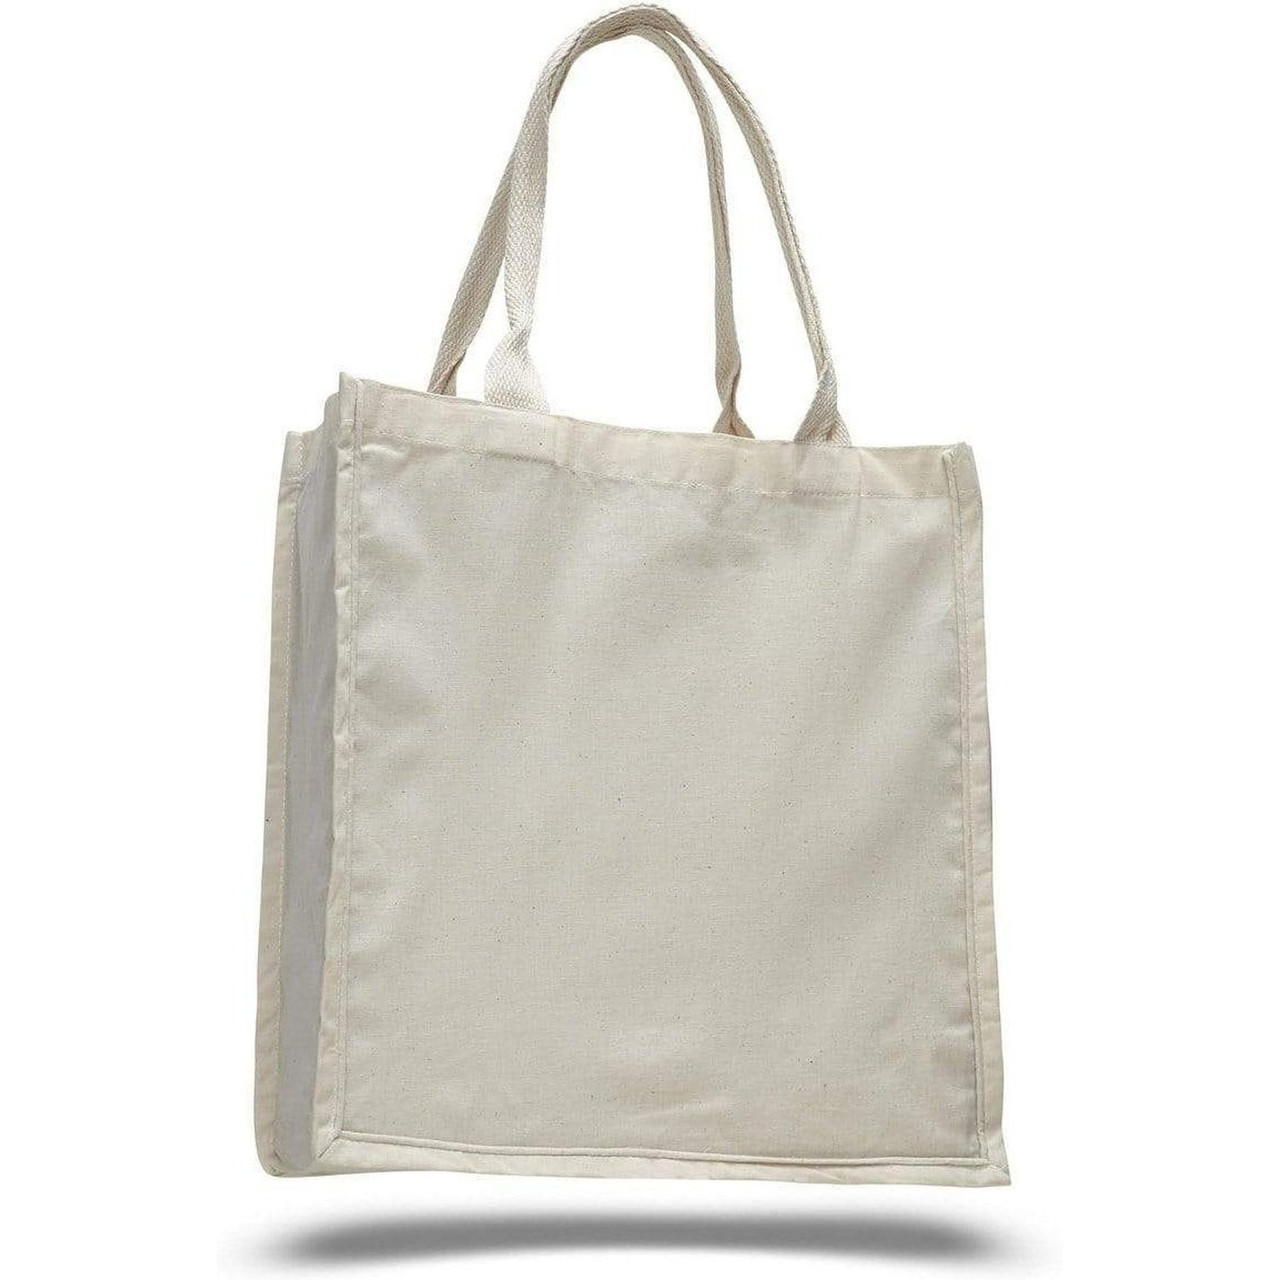 Custom Print White Cotton Tote Bags